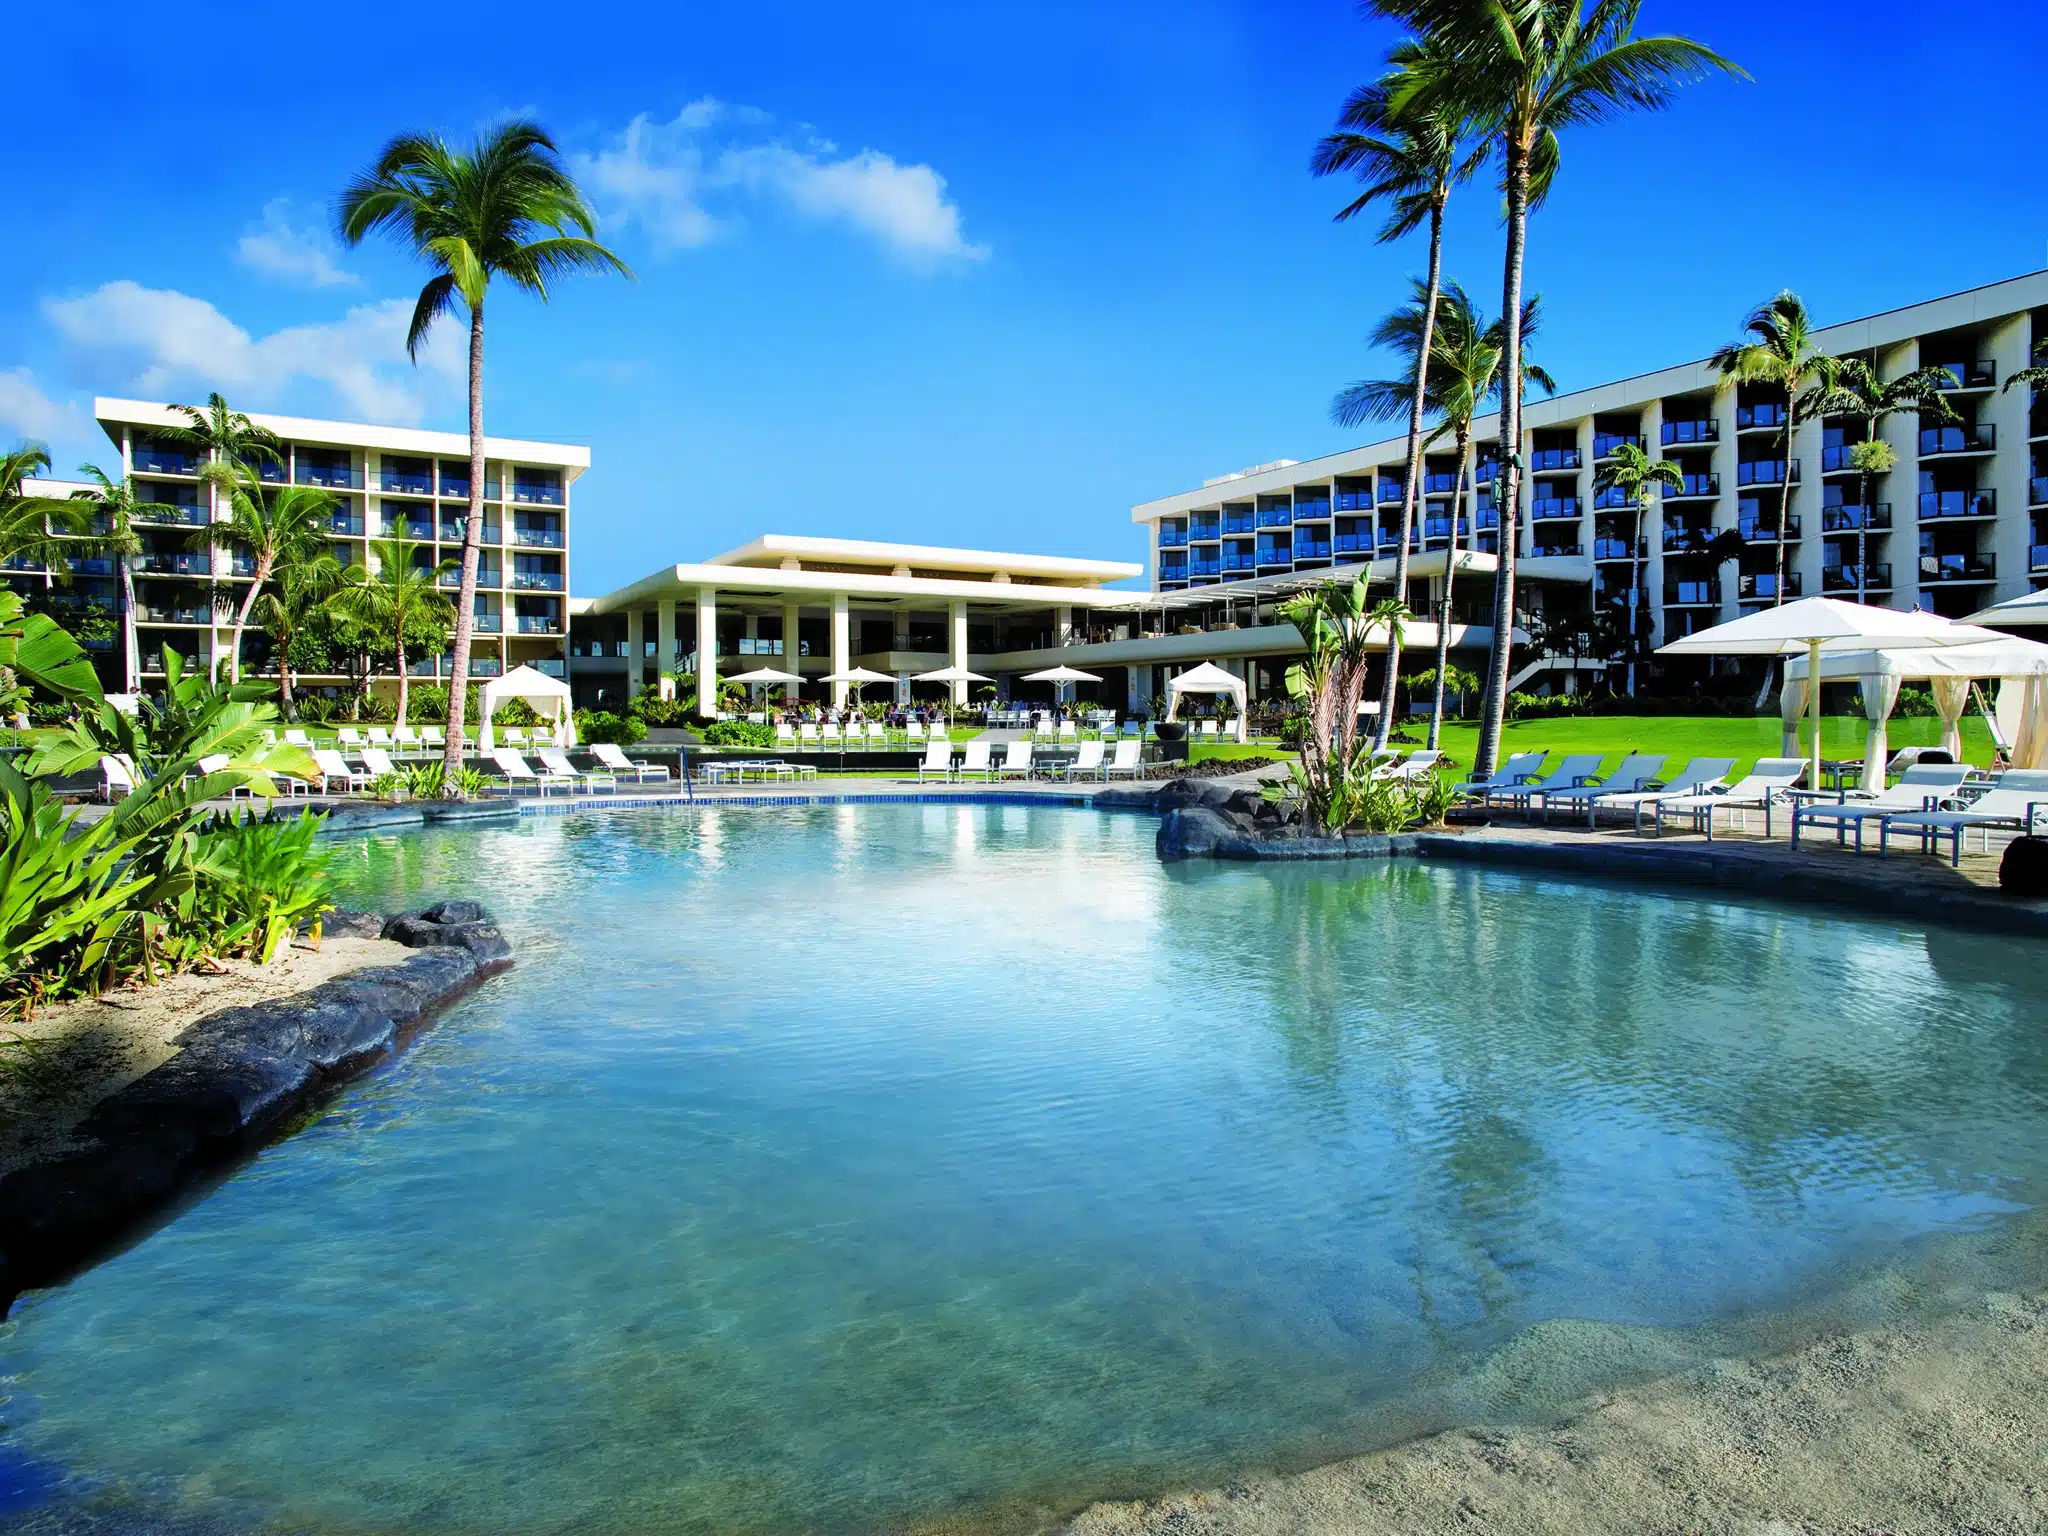 Marriott's Waikoloa Ocean Club is a Hotel located in the city of Waikoloa on Big Island, Hawaii